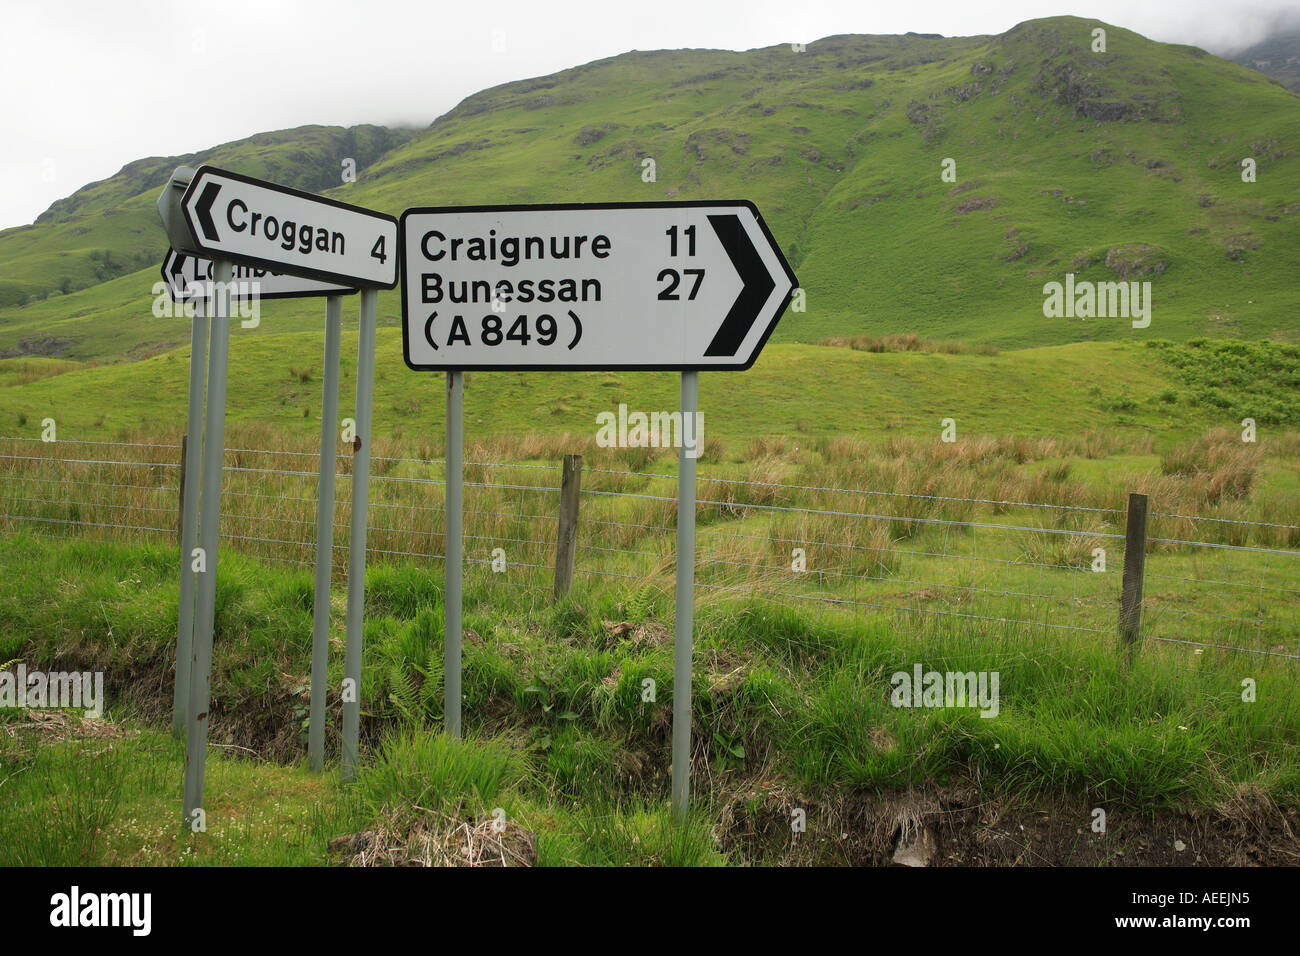 Moderne Wegweiser auf Mull Schottland Craigure 11 Bunessan 27 Croggan 4 Lochbuie 3 Meilen Stockfoto